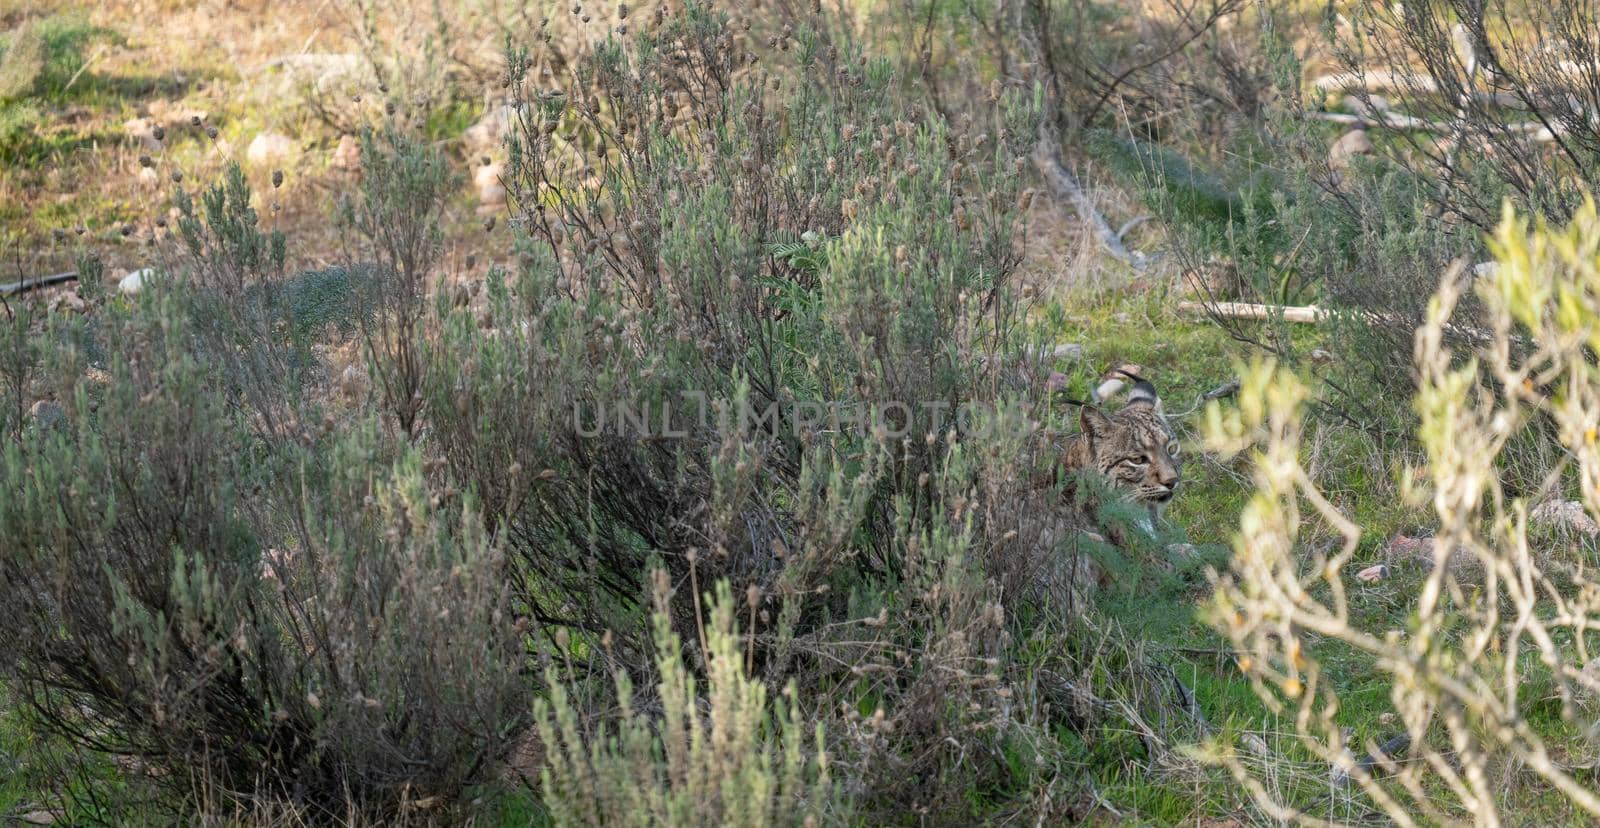 Iberian lynx quiet laid down behing the bush